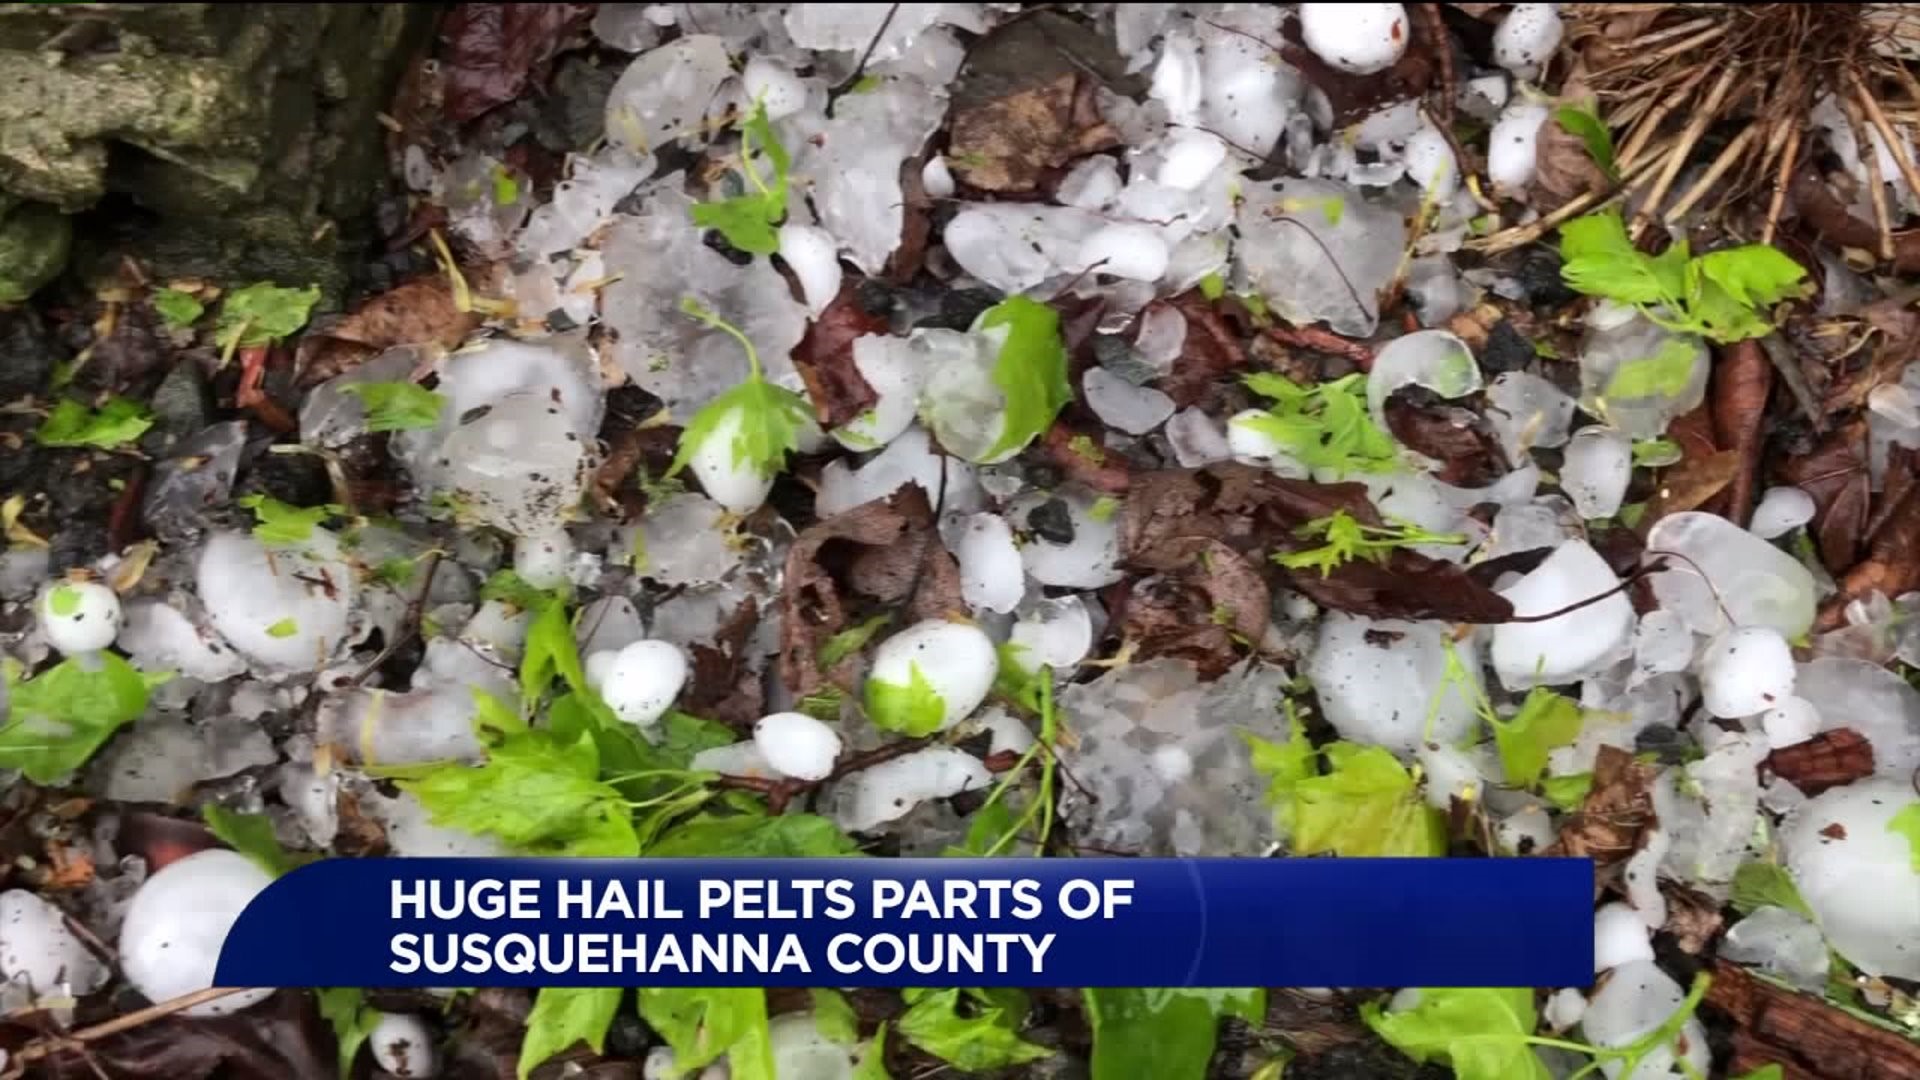 Huge Hail Pelts Parts of Susquehanna County